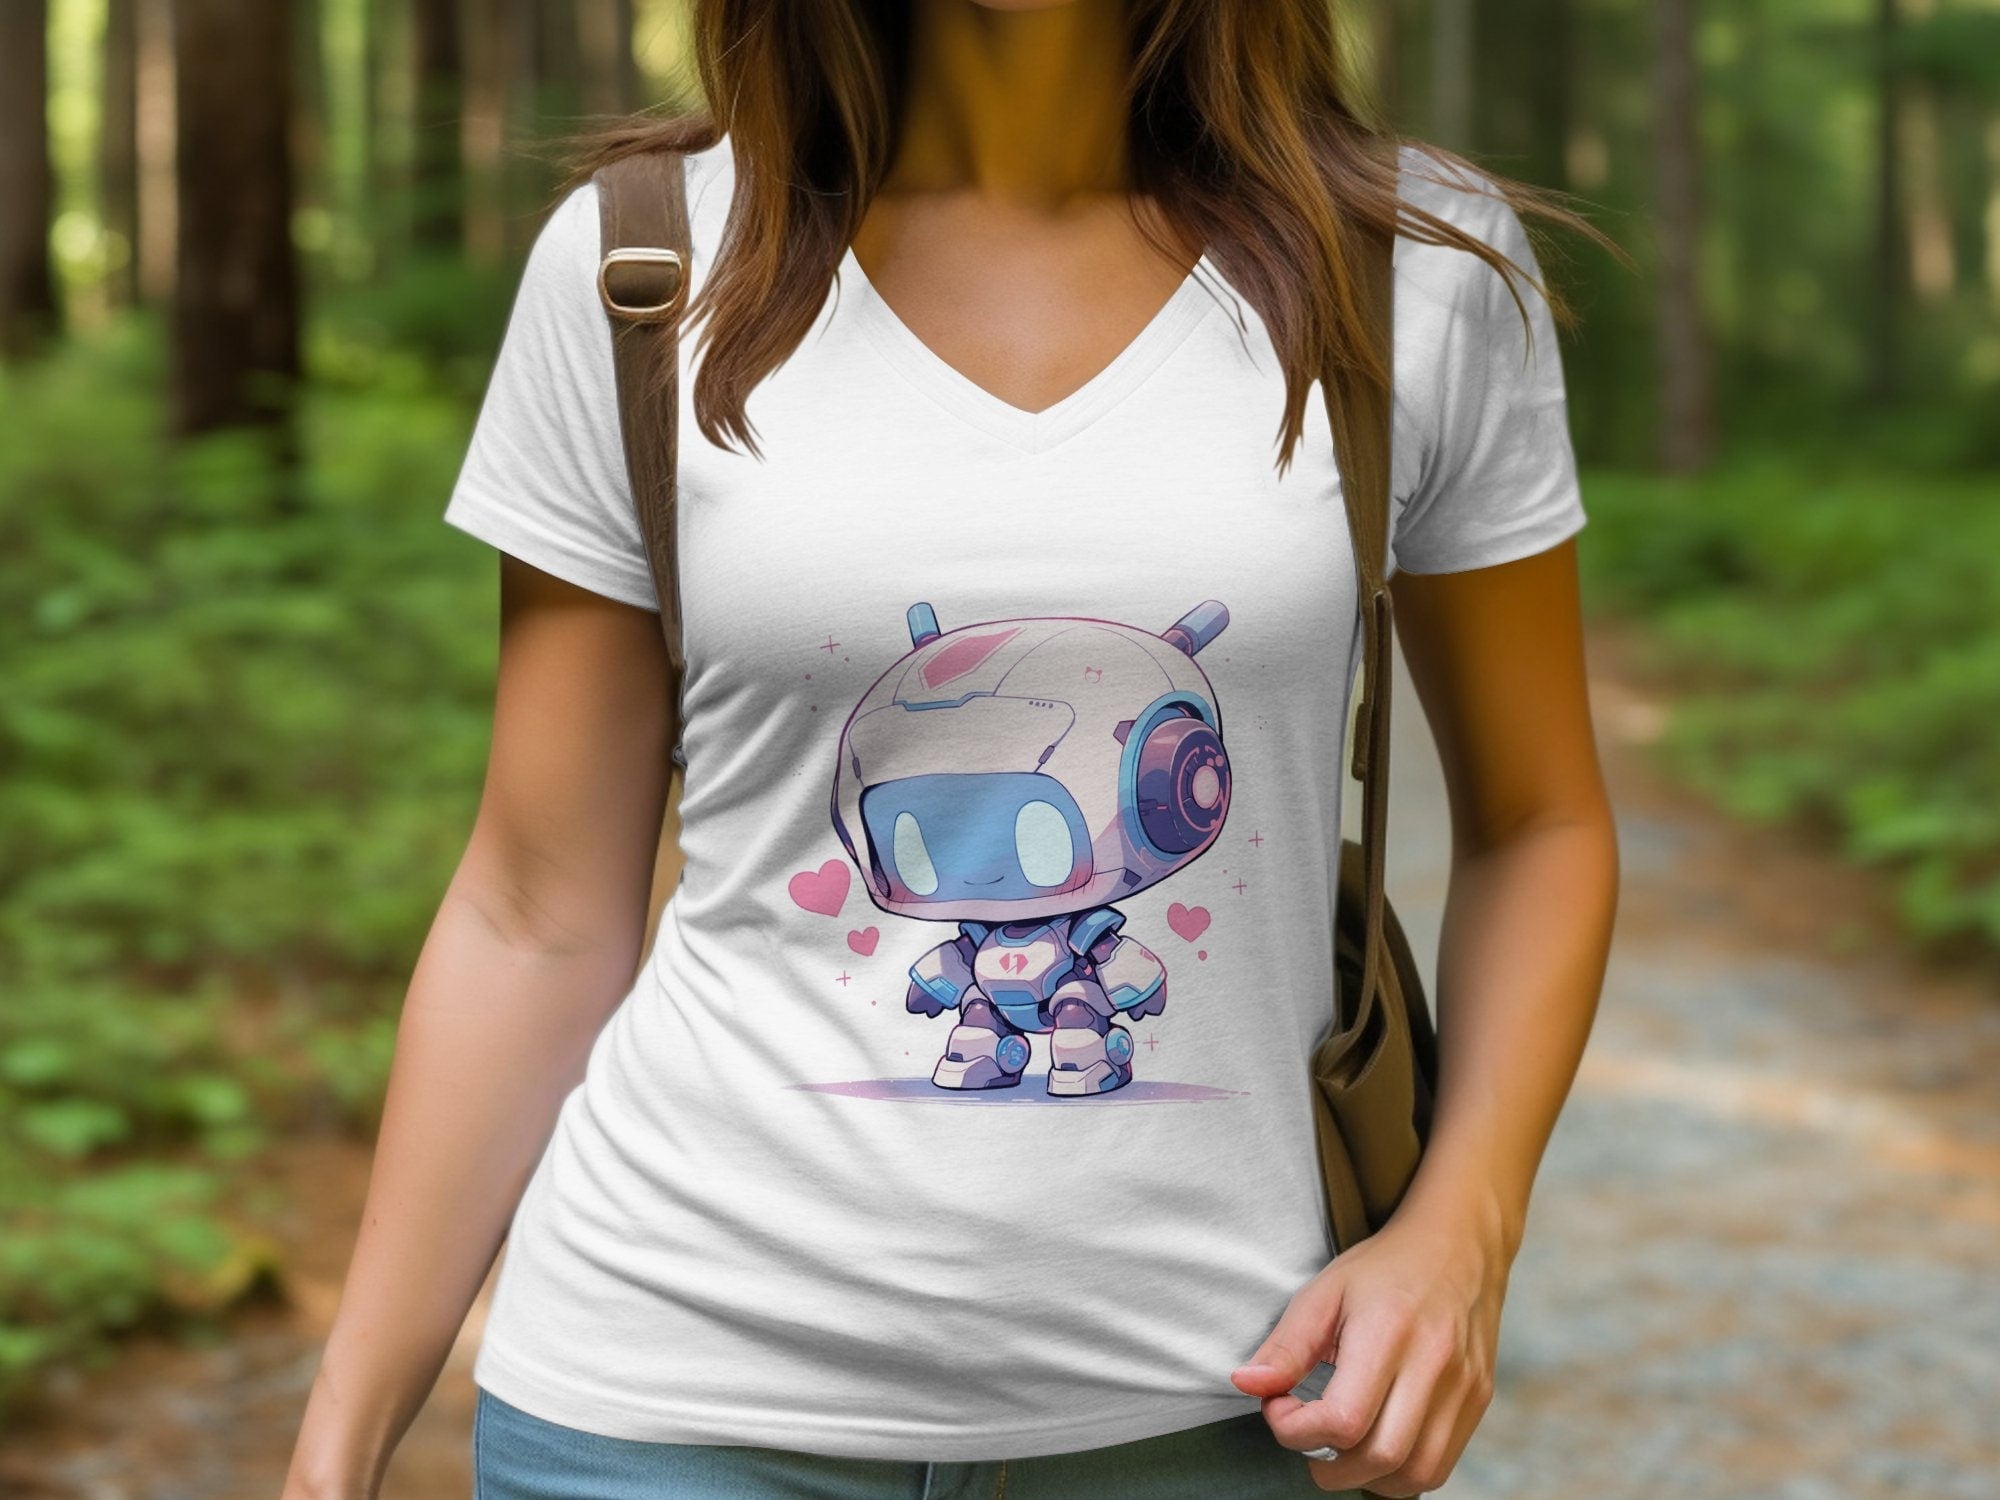 Cute Robot Love Heart V-Neck T-Shirt - MiTo Store